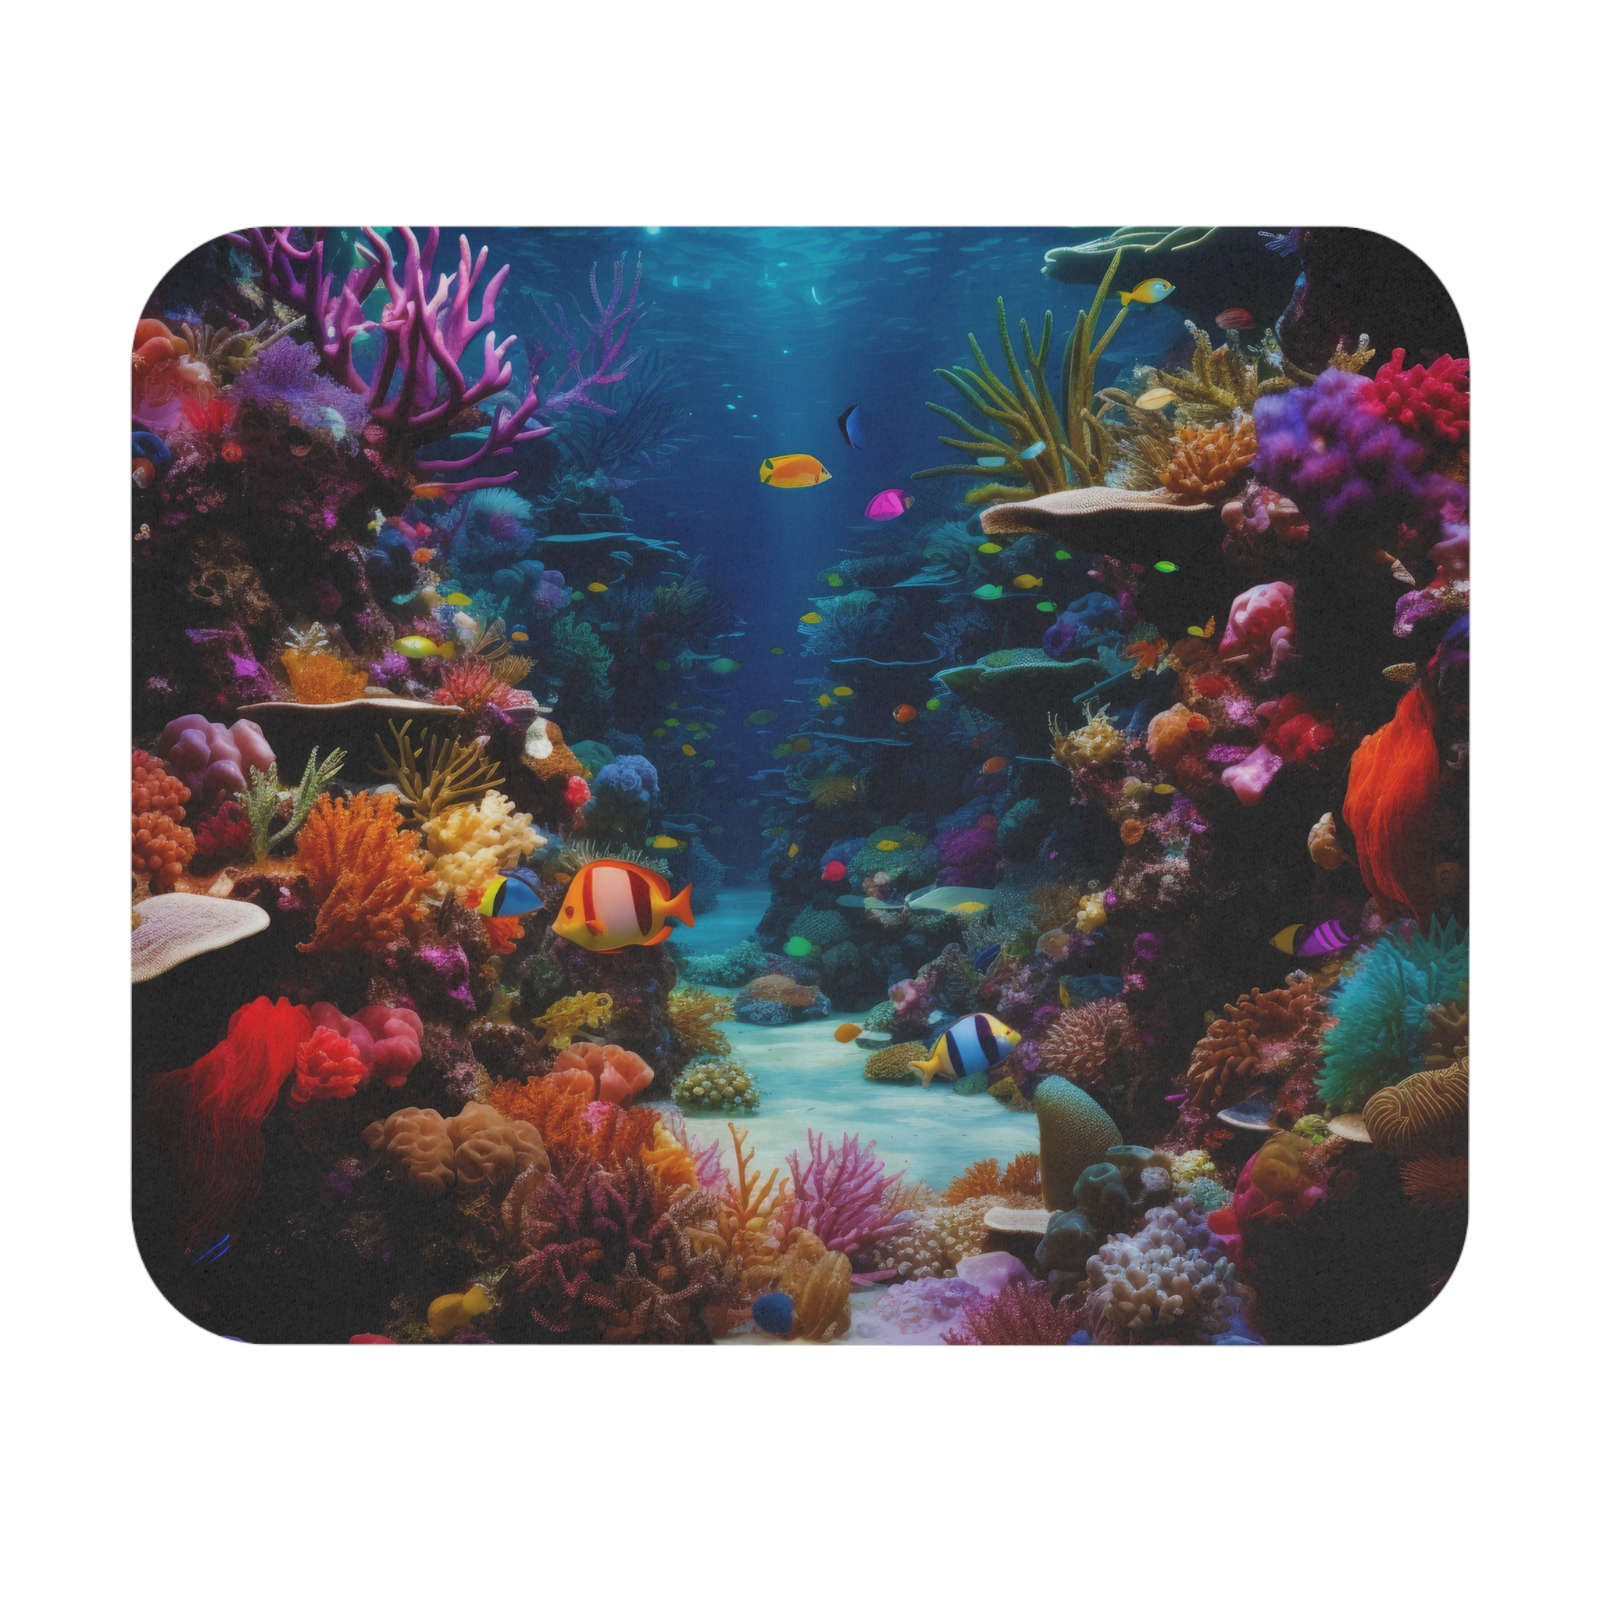 Coral Reef Mouse Pad Underwater Fish Colorful Ocean Beach Desktop Laptop Gift